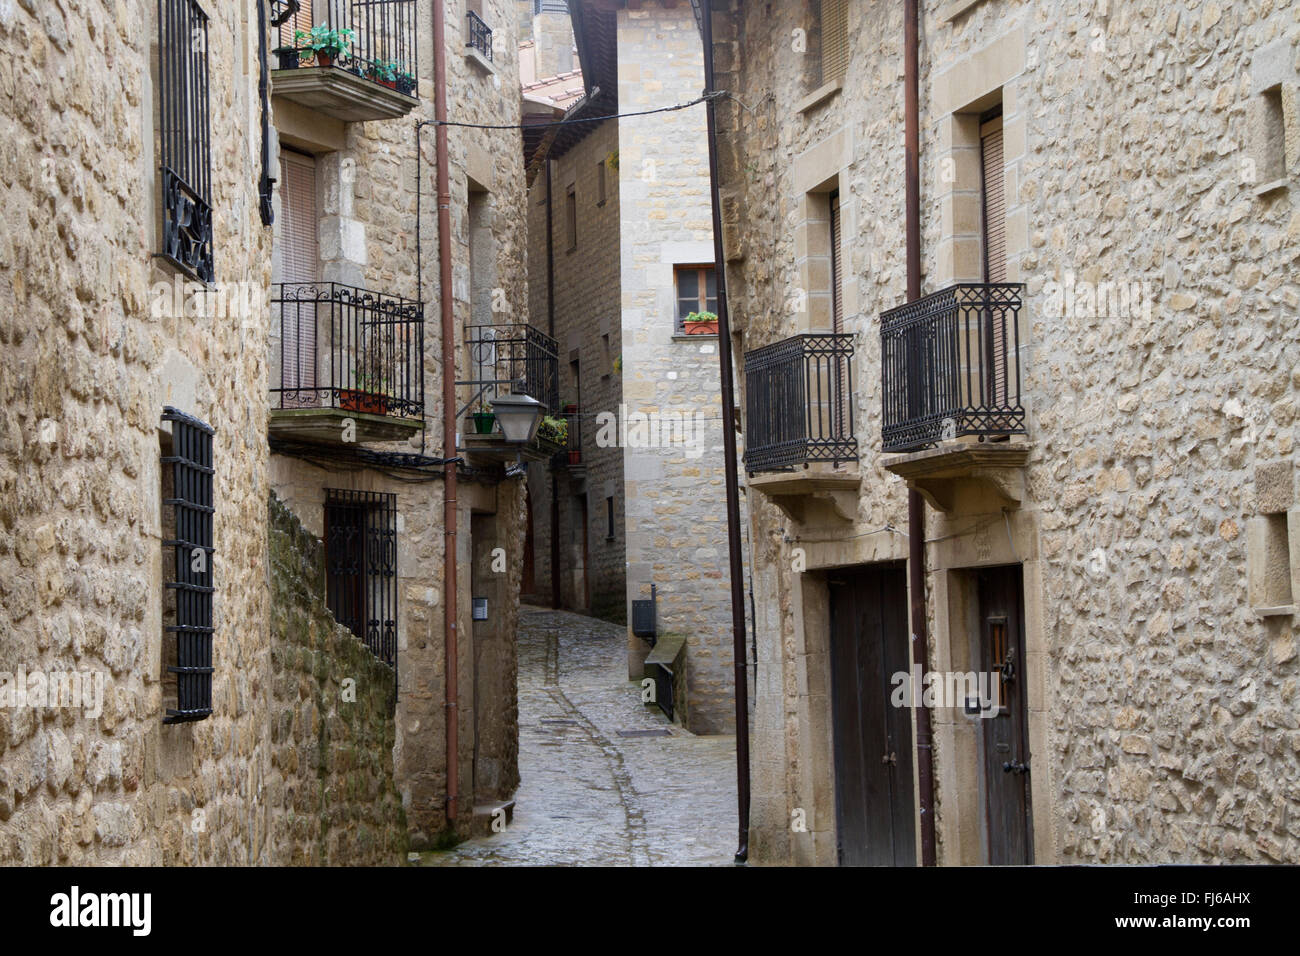 Narrow stone street in the medieval village of Sos del Rey Catolico Spain Stock Photo